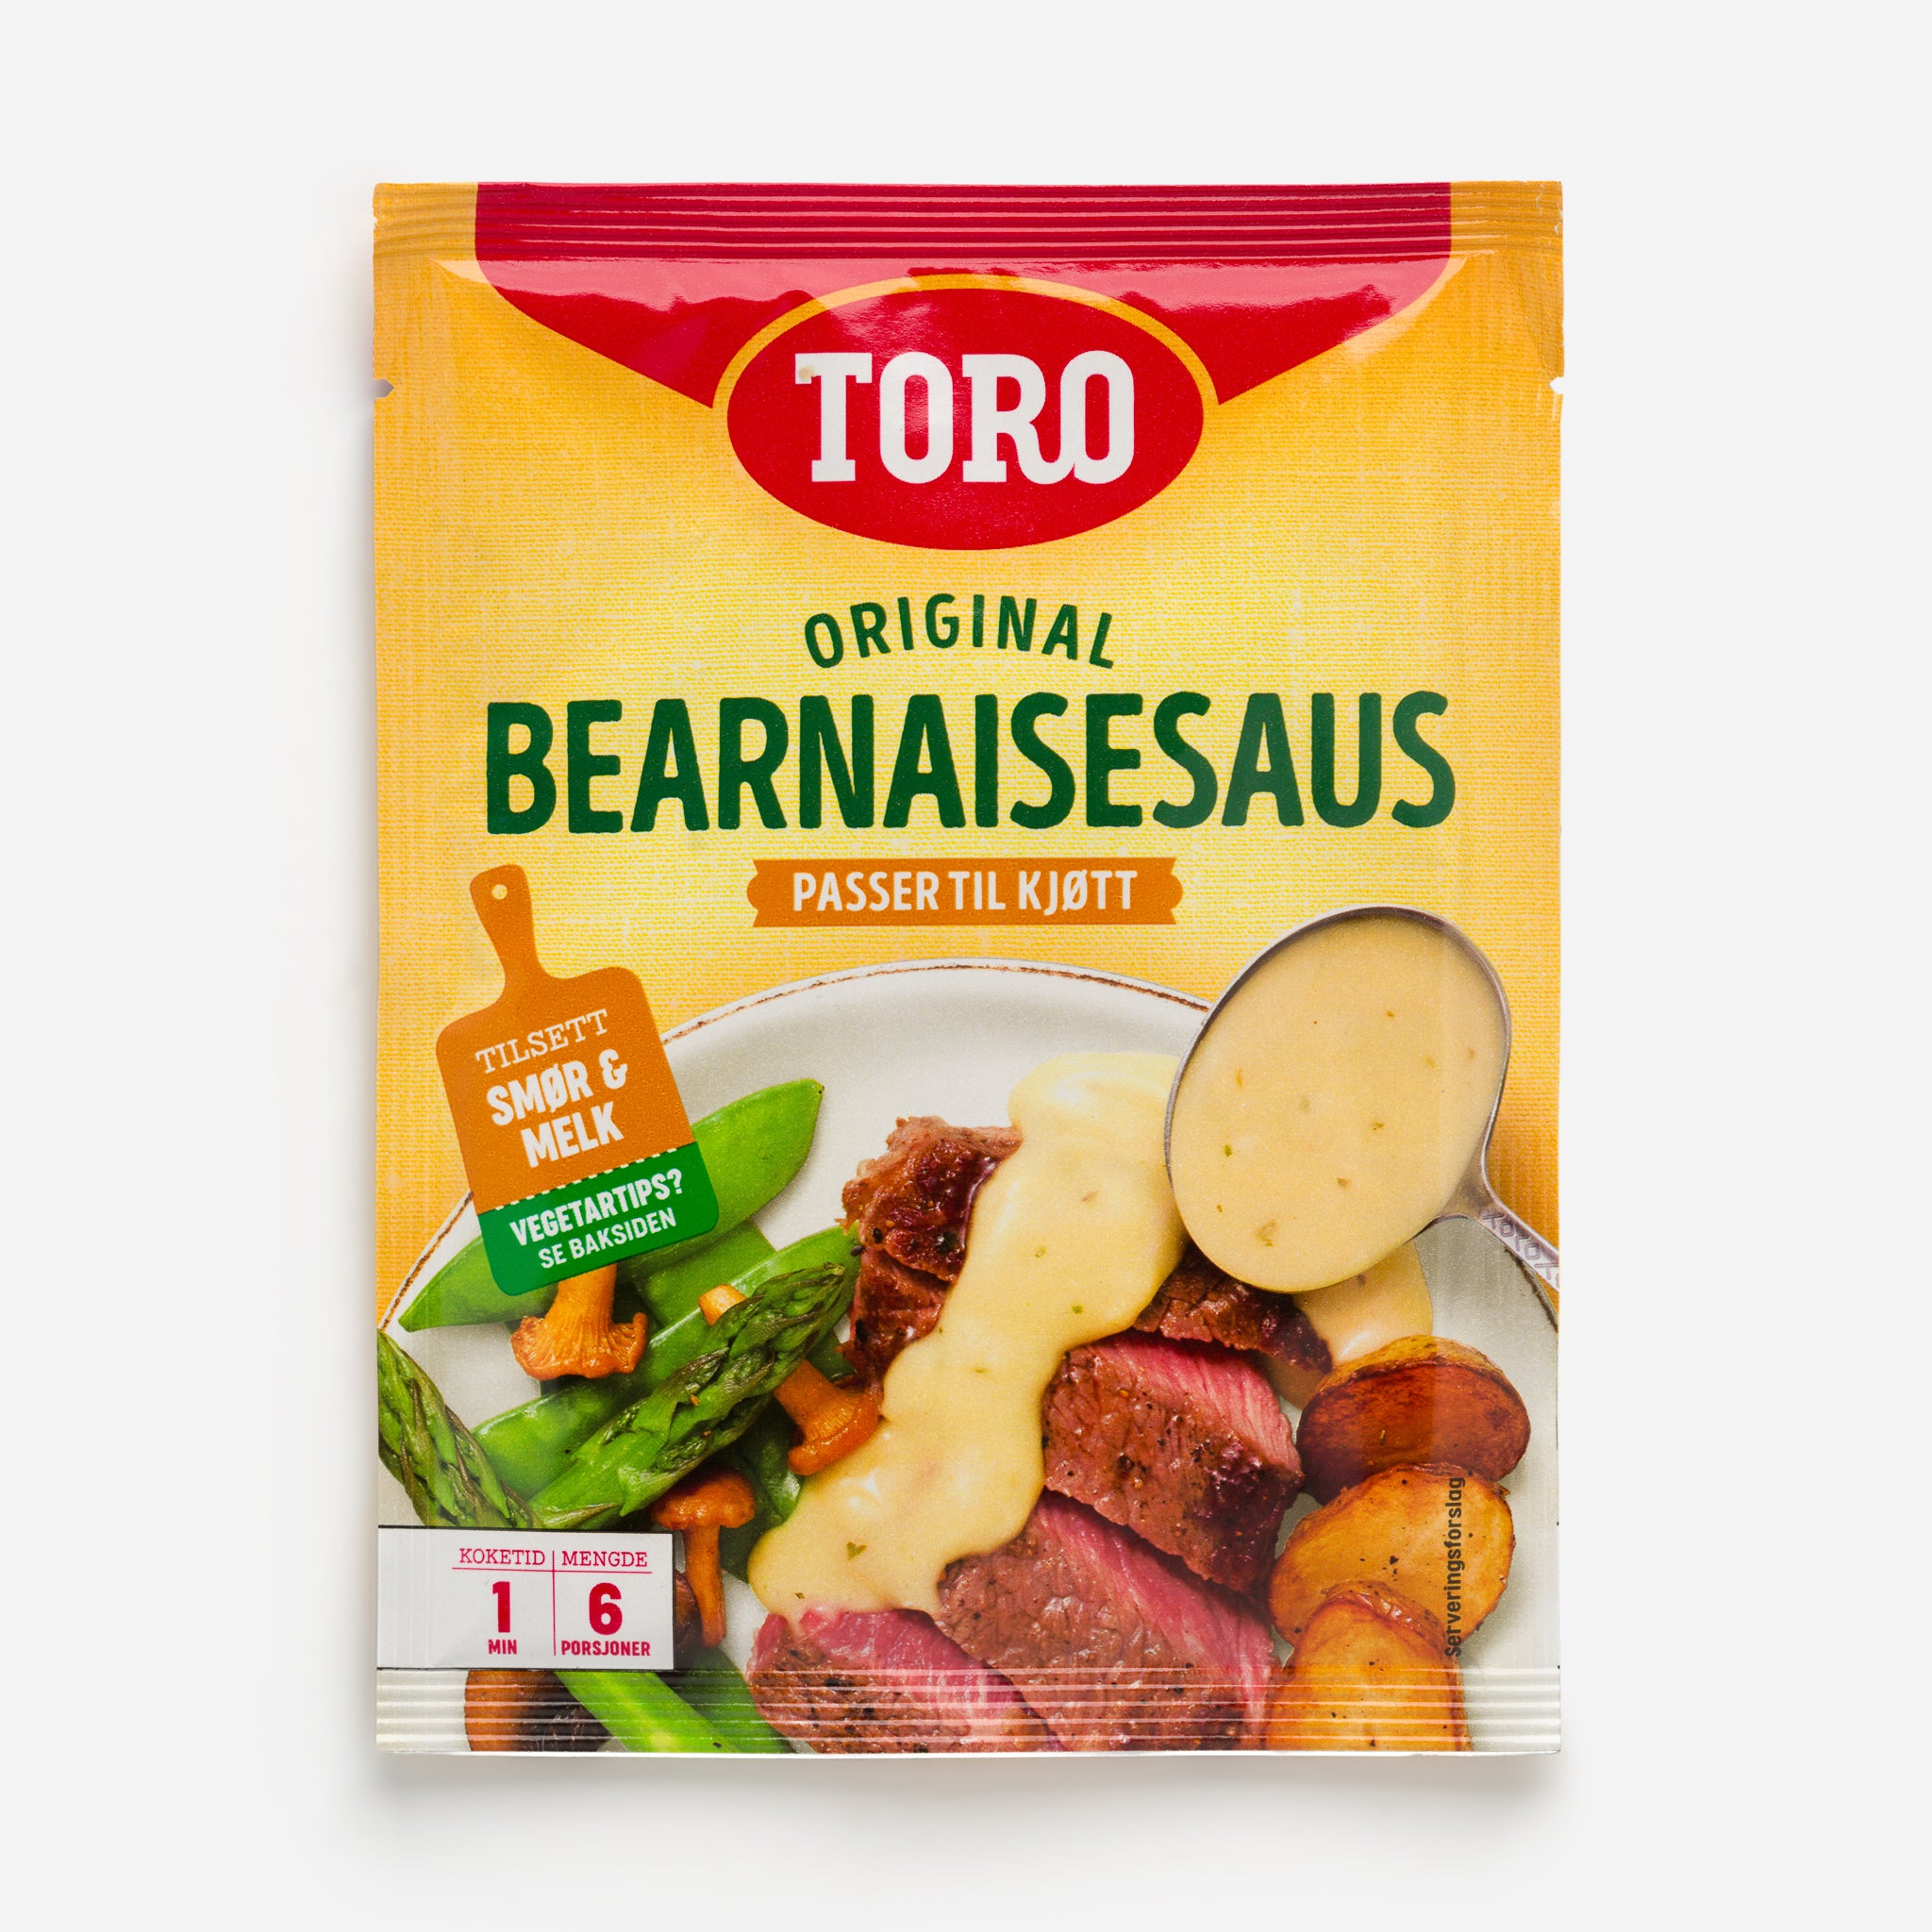 Bearnaise Sauce from Toro